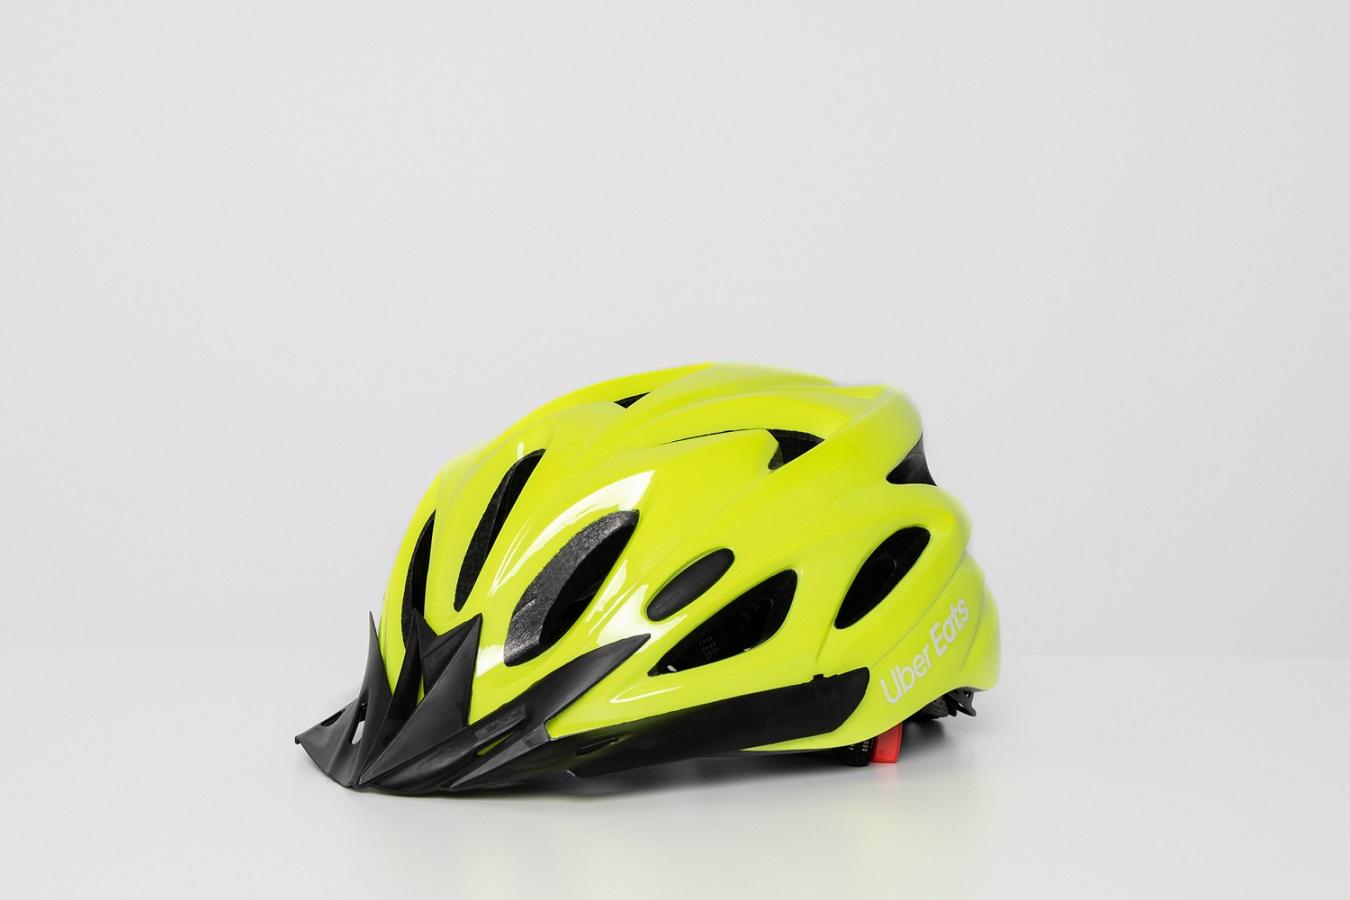 Mochila Cúbica Extensível + Kit de segurança para bicicletas + Capacete de bicicleta + Casaco refletor